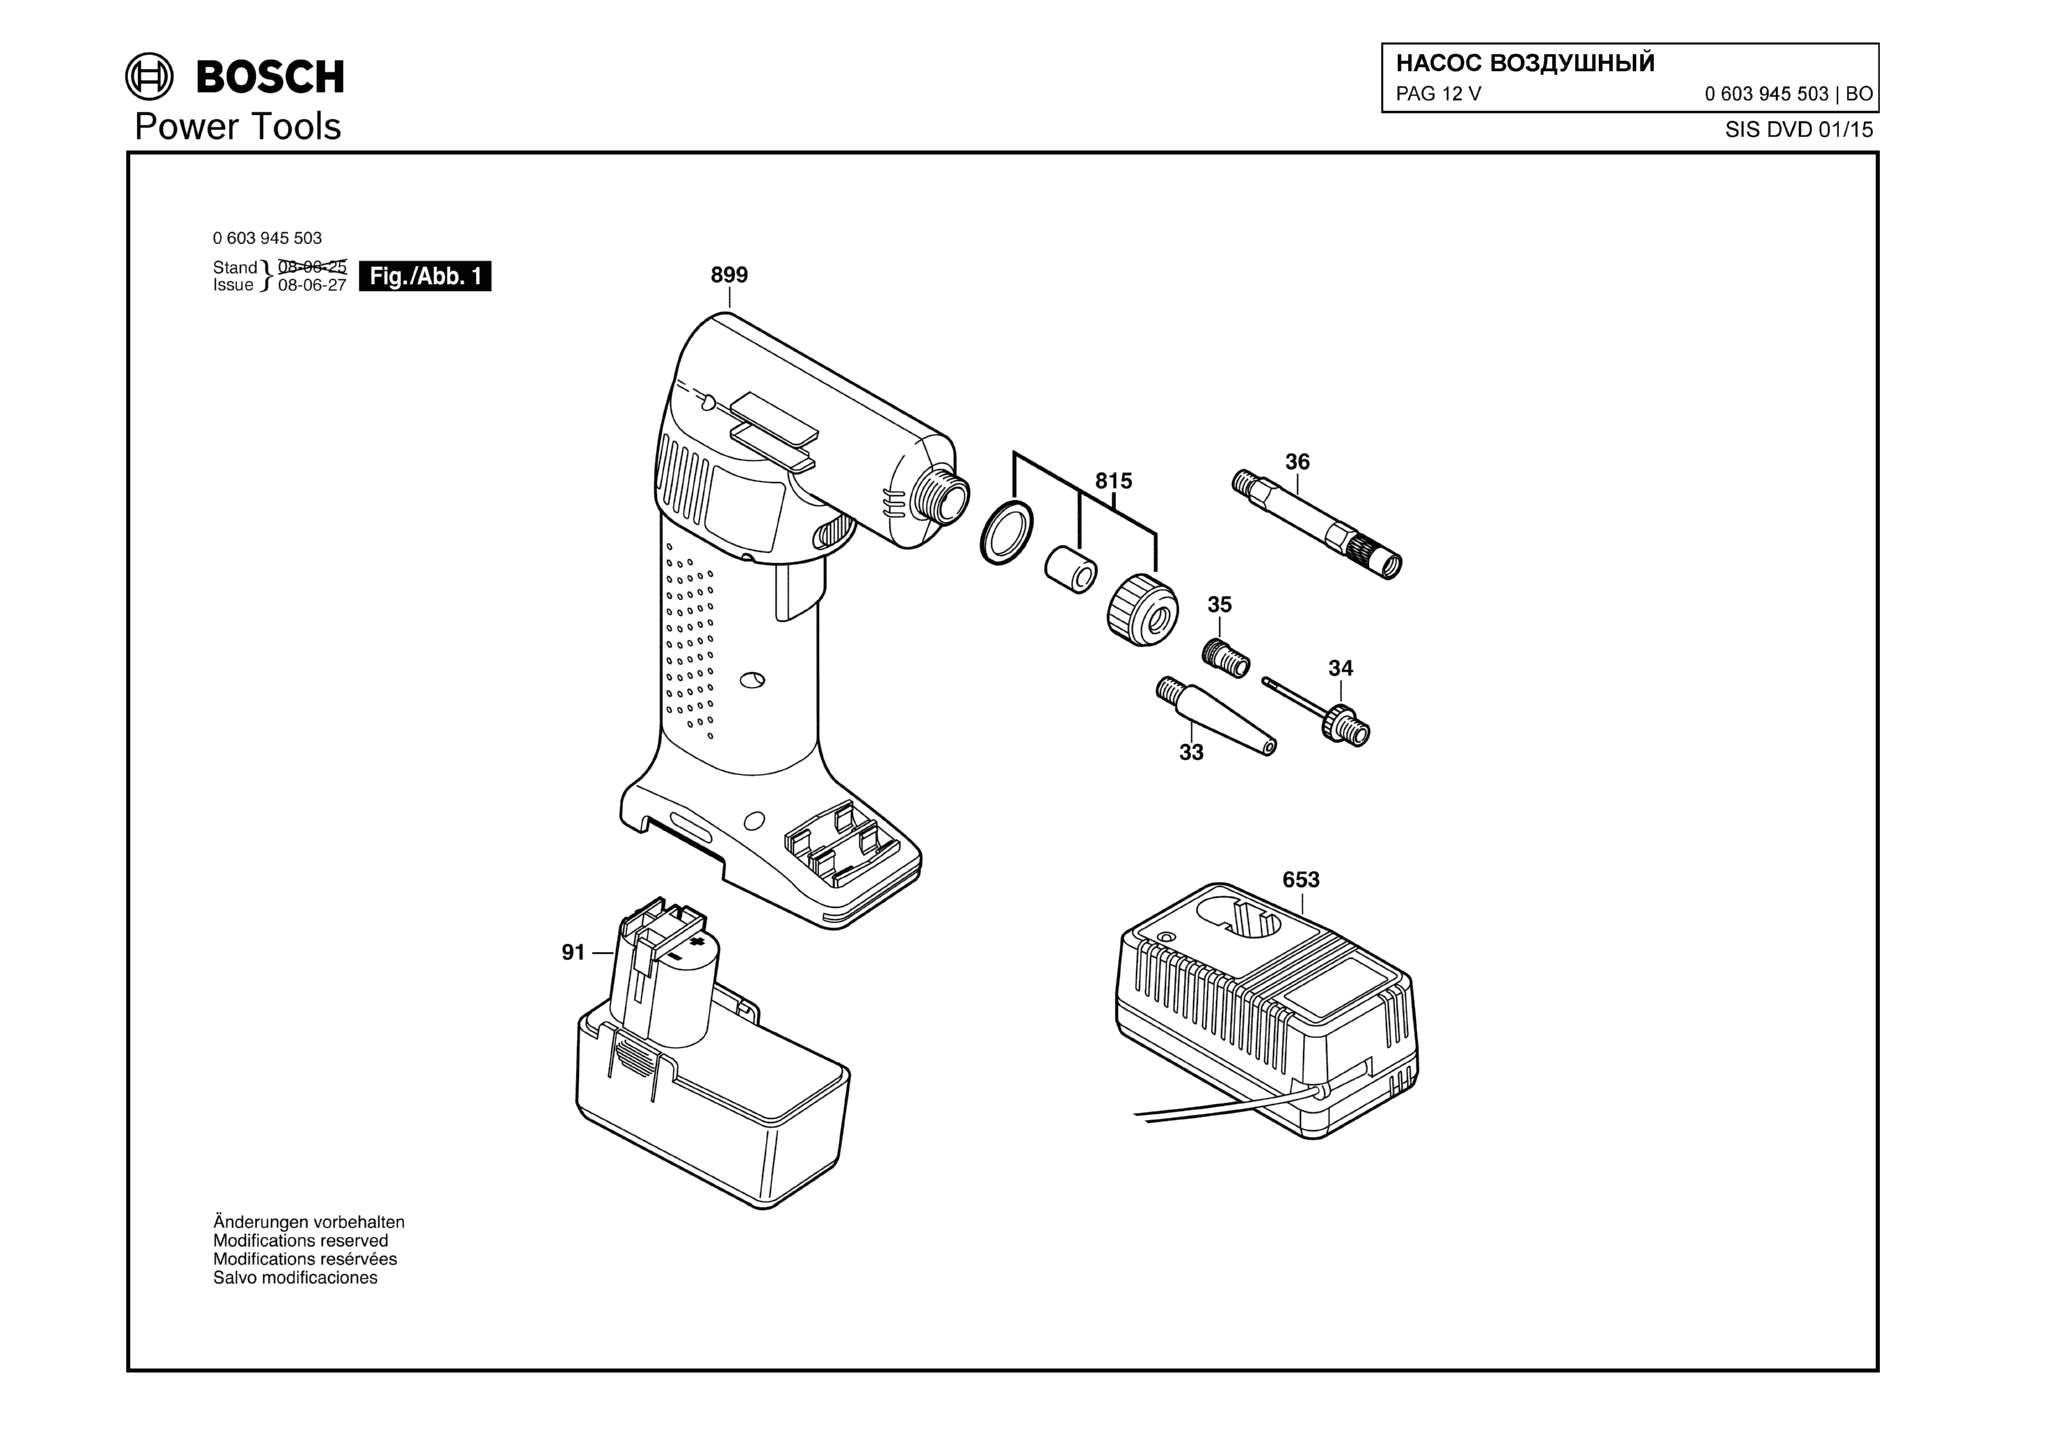 Запчасти, схема и деталировка Bosch PAG 12 V (ТИП 0603945503)